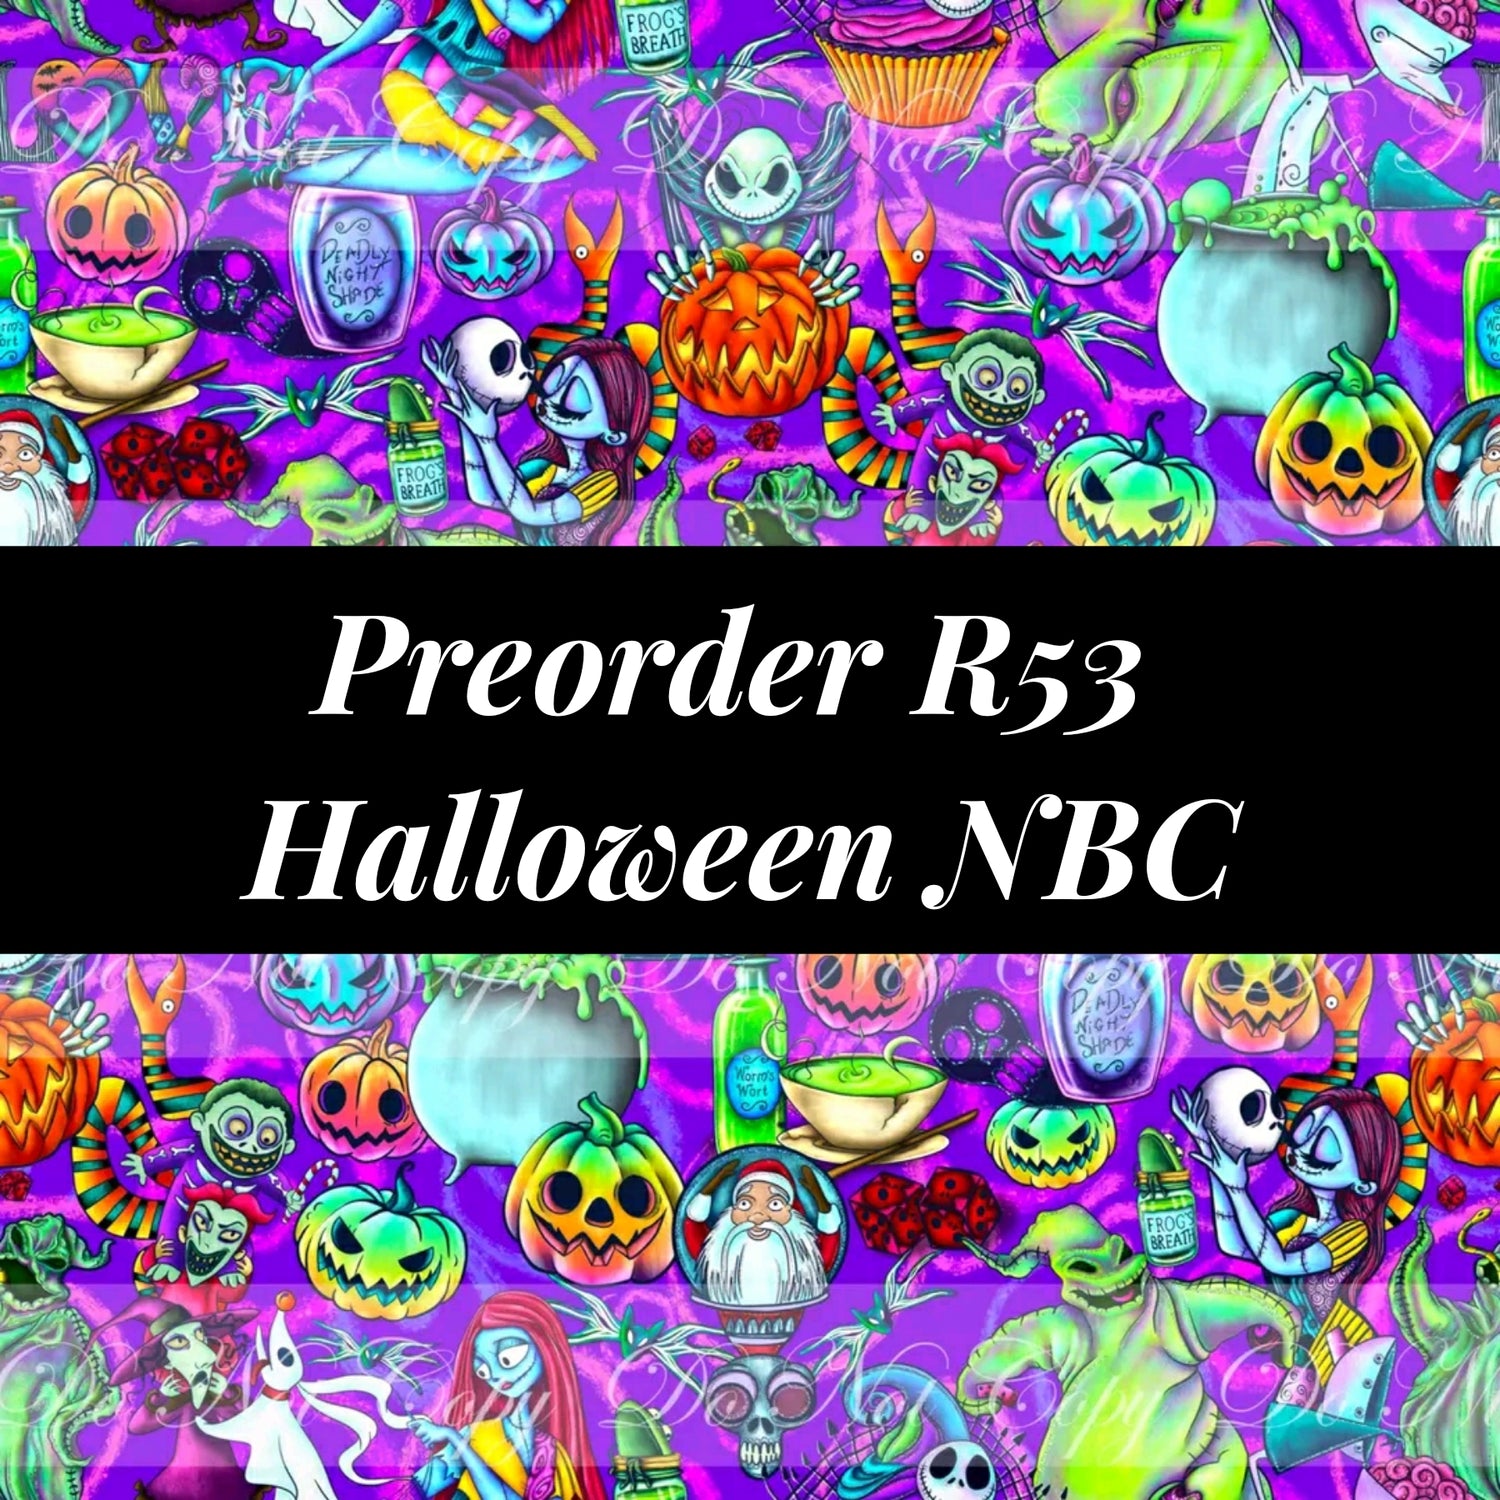 Preorder R53 Halloween NBC